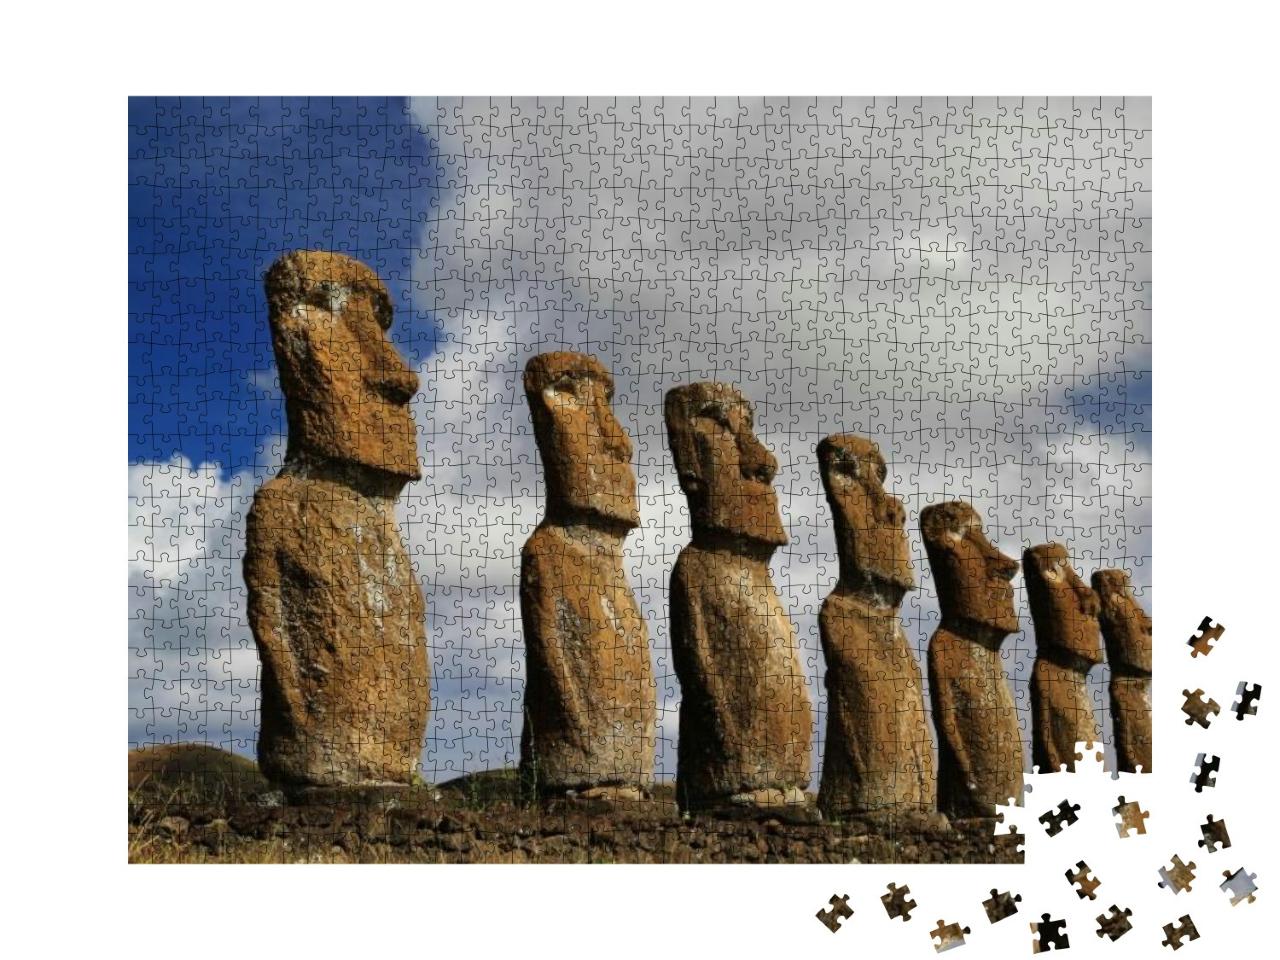 Puzzle 1000 Teile „Ahu Akivi Moai, berühmte Steinfiguren auf der Osterinsel“